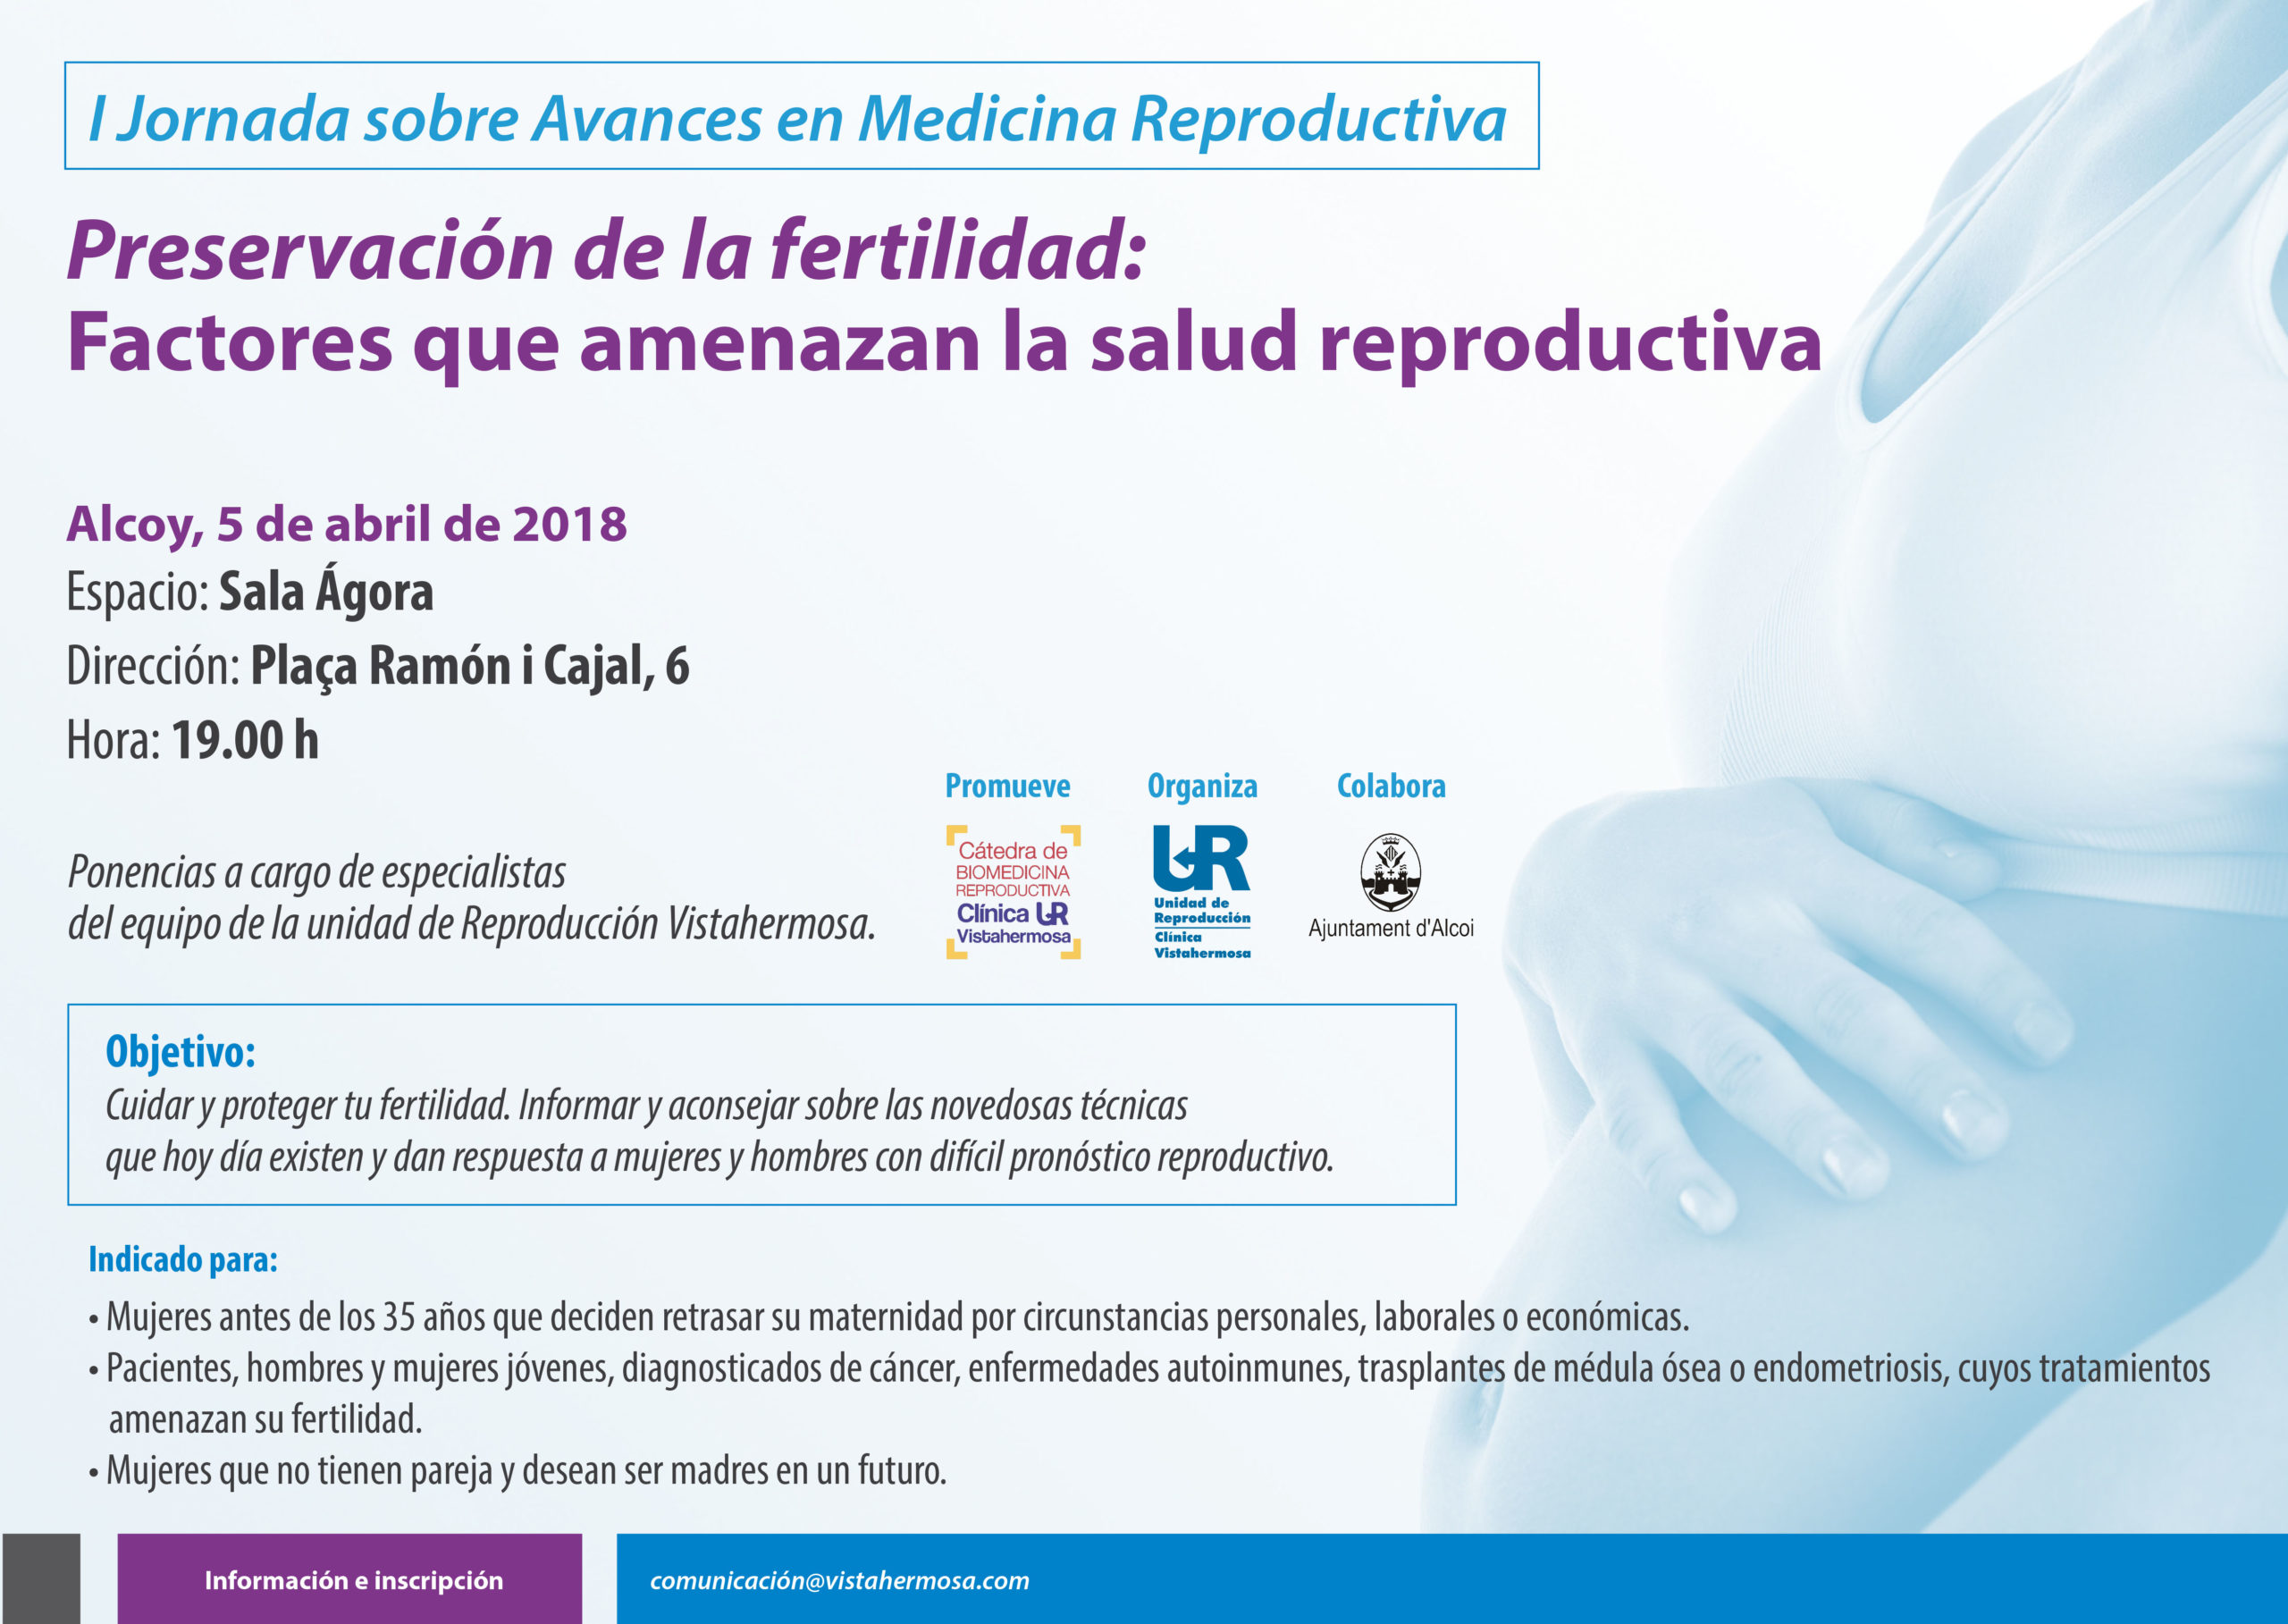 UR Vistahermosa team professionals explain the innovative techniques to preserve fertility